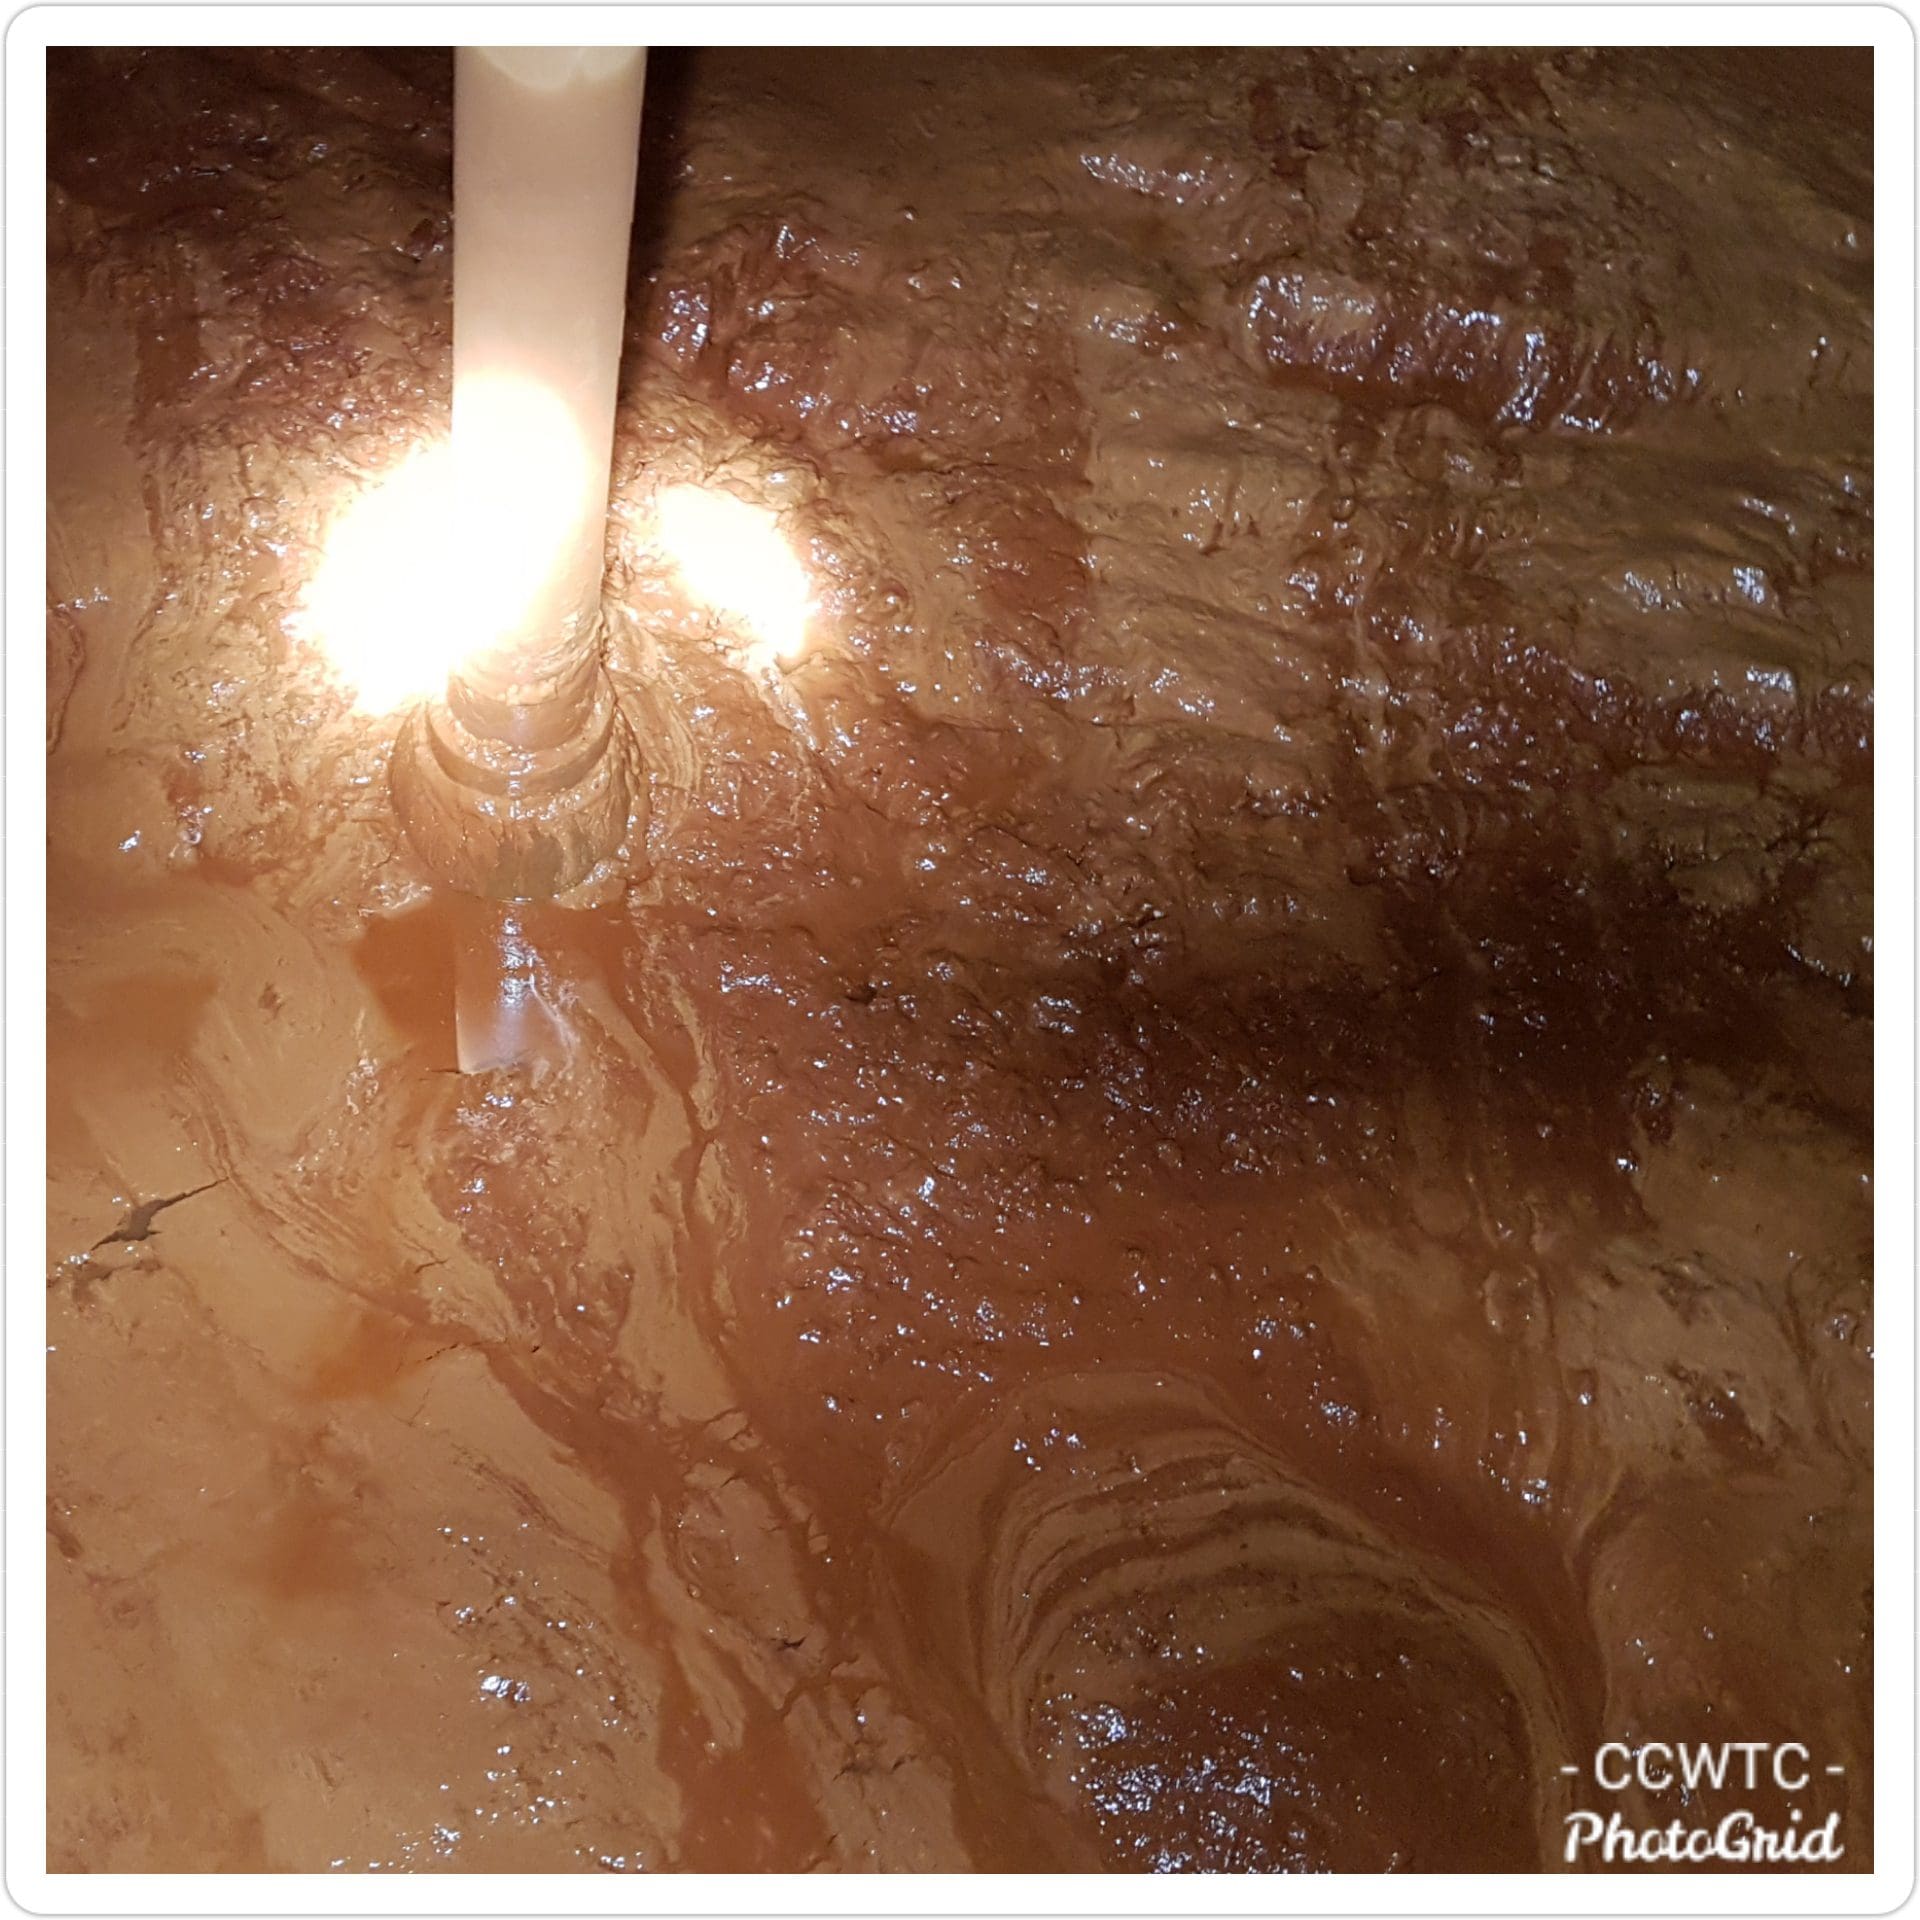 Inside a tank with deep sludge on the floor